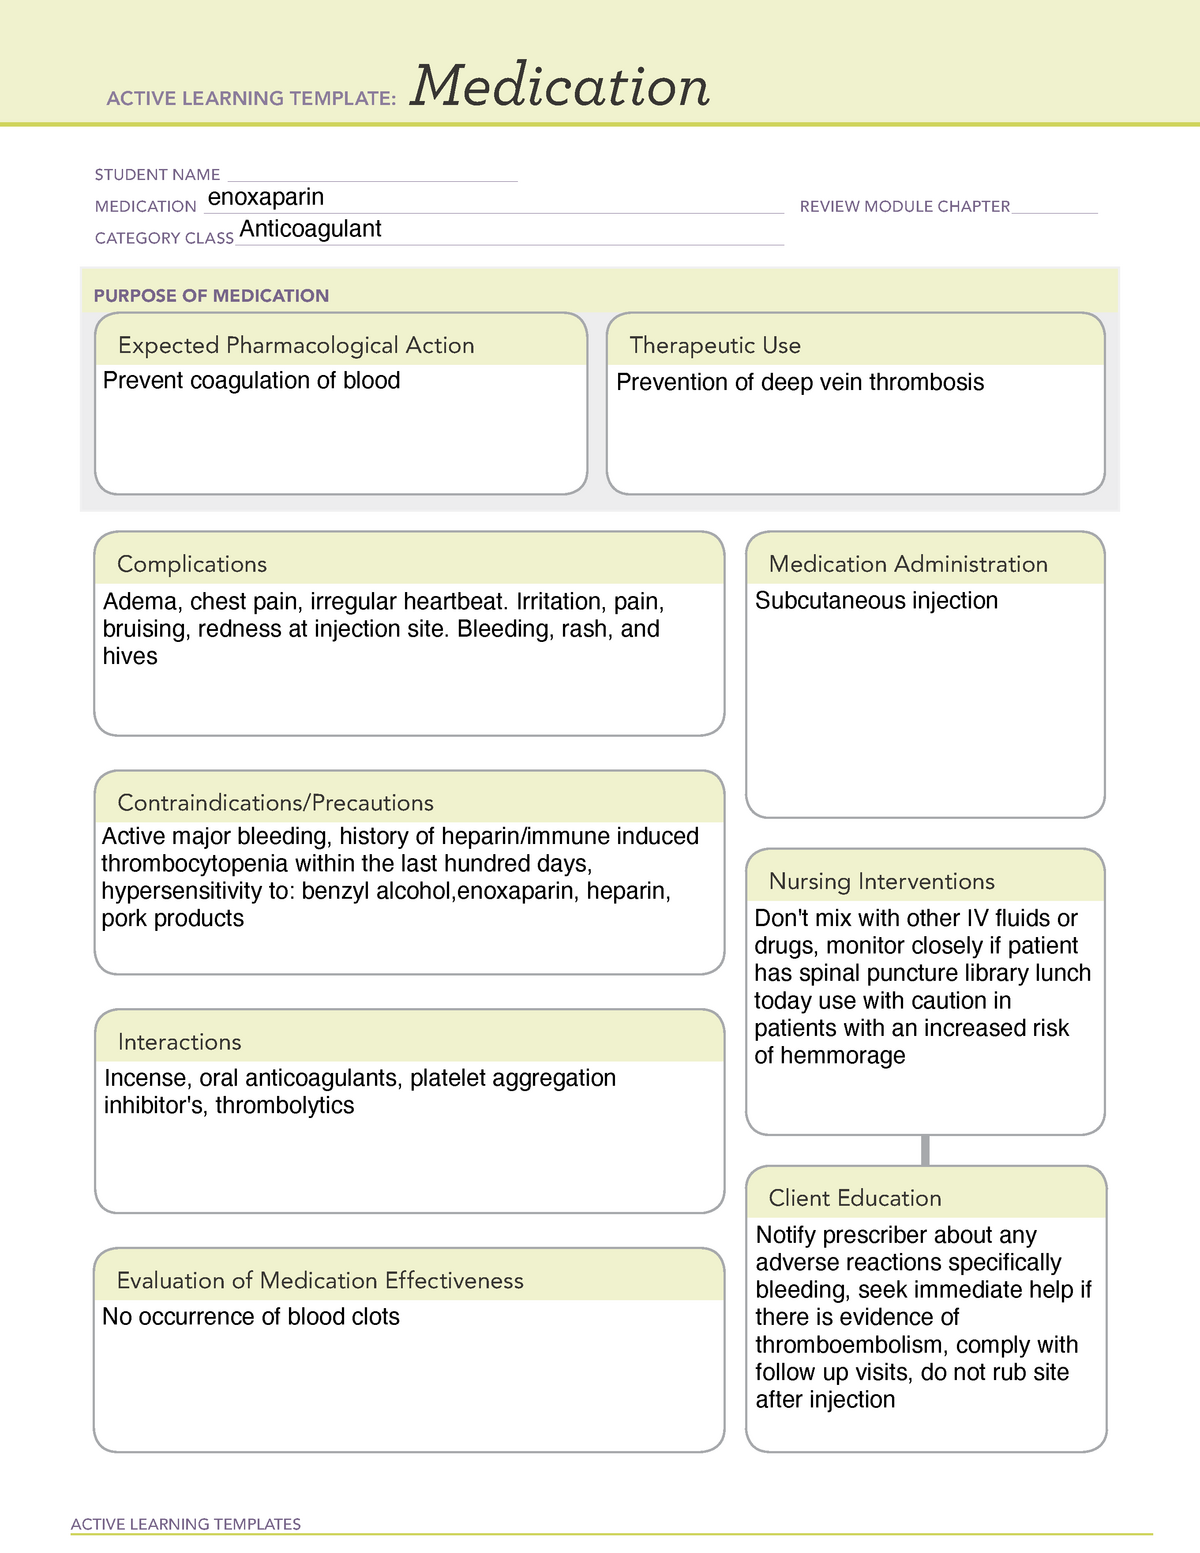 Enoxaparin ATI template ACTIVE LEARNING TEMPLATES Medication